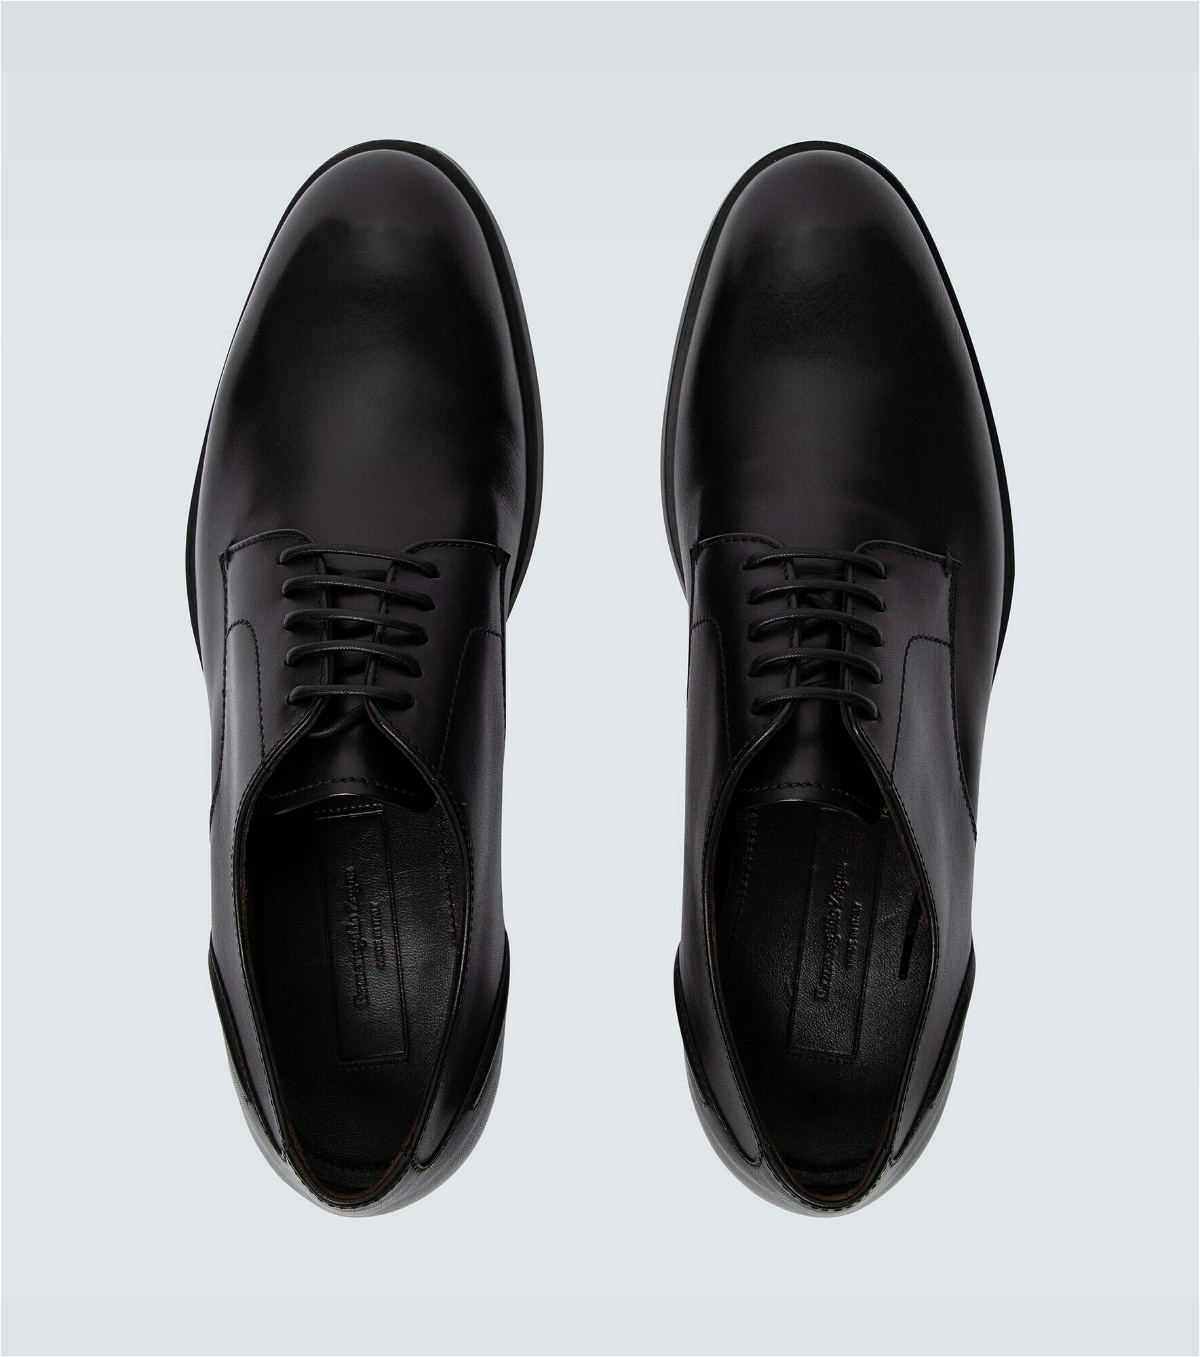 Zegna - Formal Oxford shoes Zegna